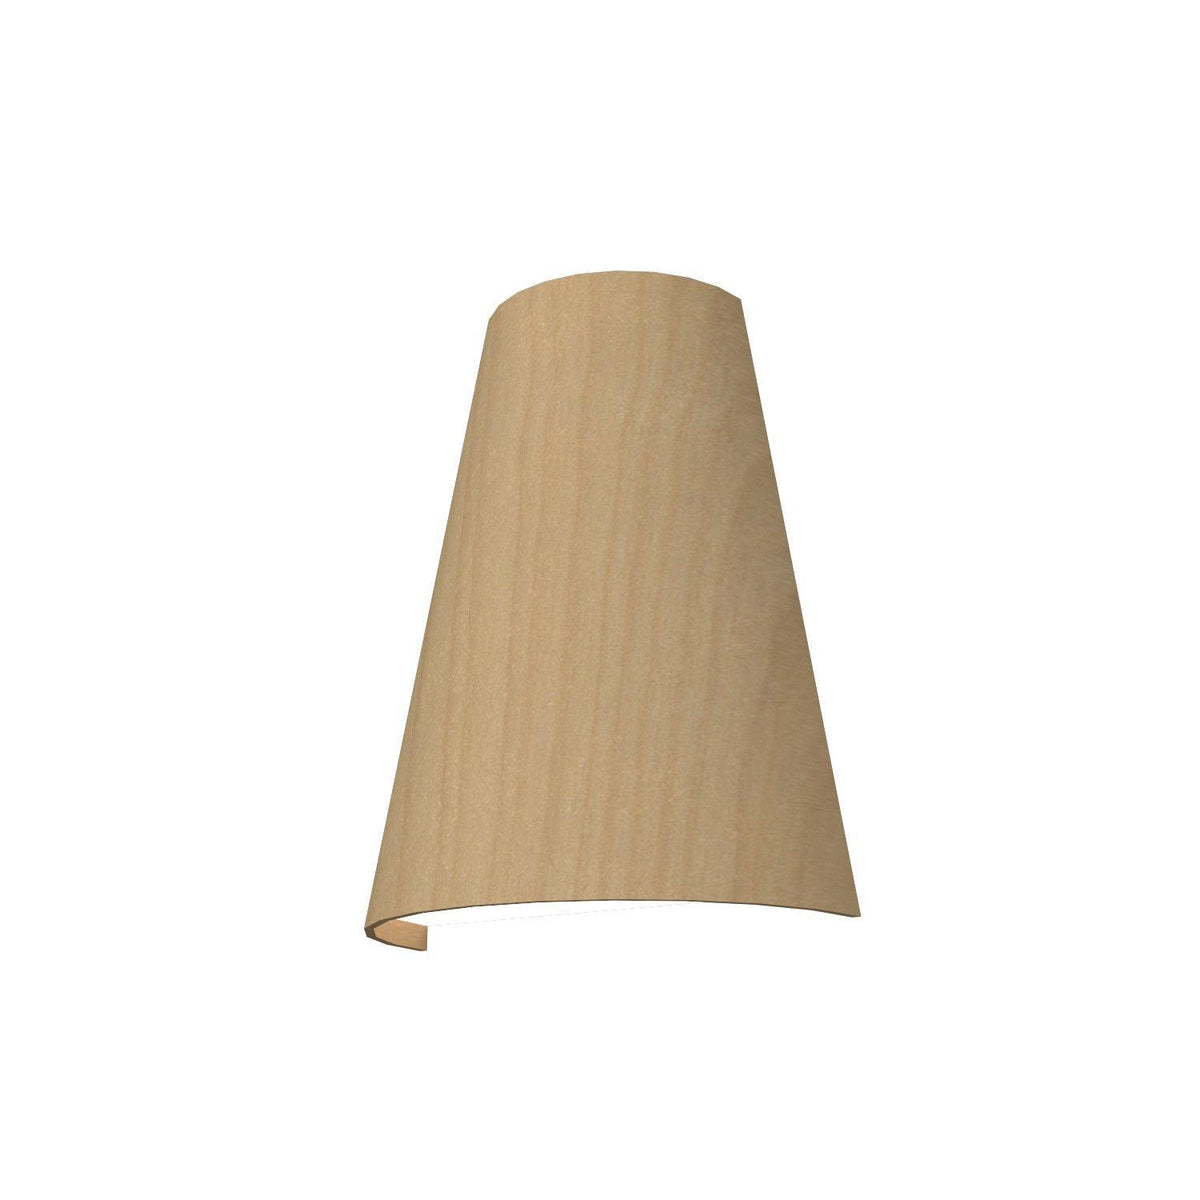 Accord Lighting - Conical Accord Wall Lamp 4018C - 4018C.34 | Montreal Lighting & Hardware